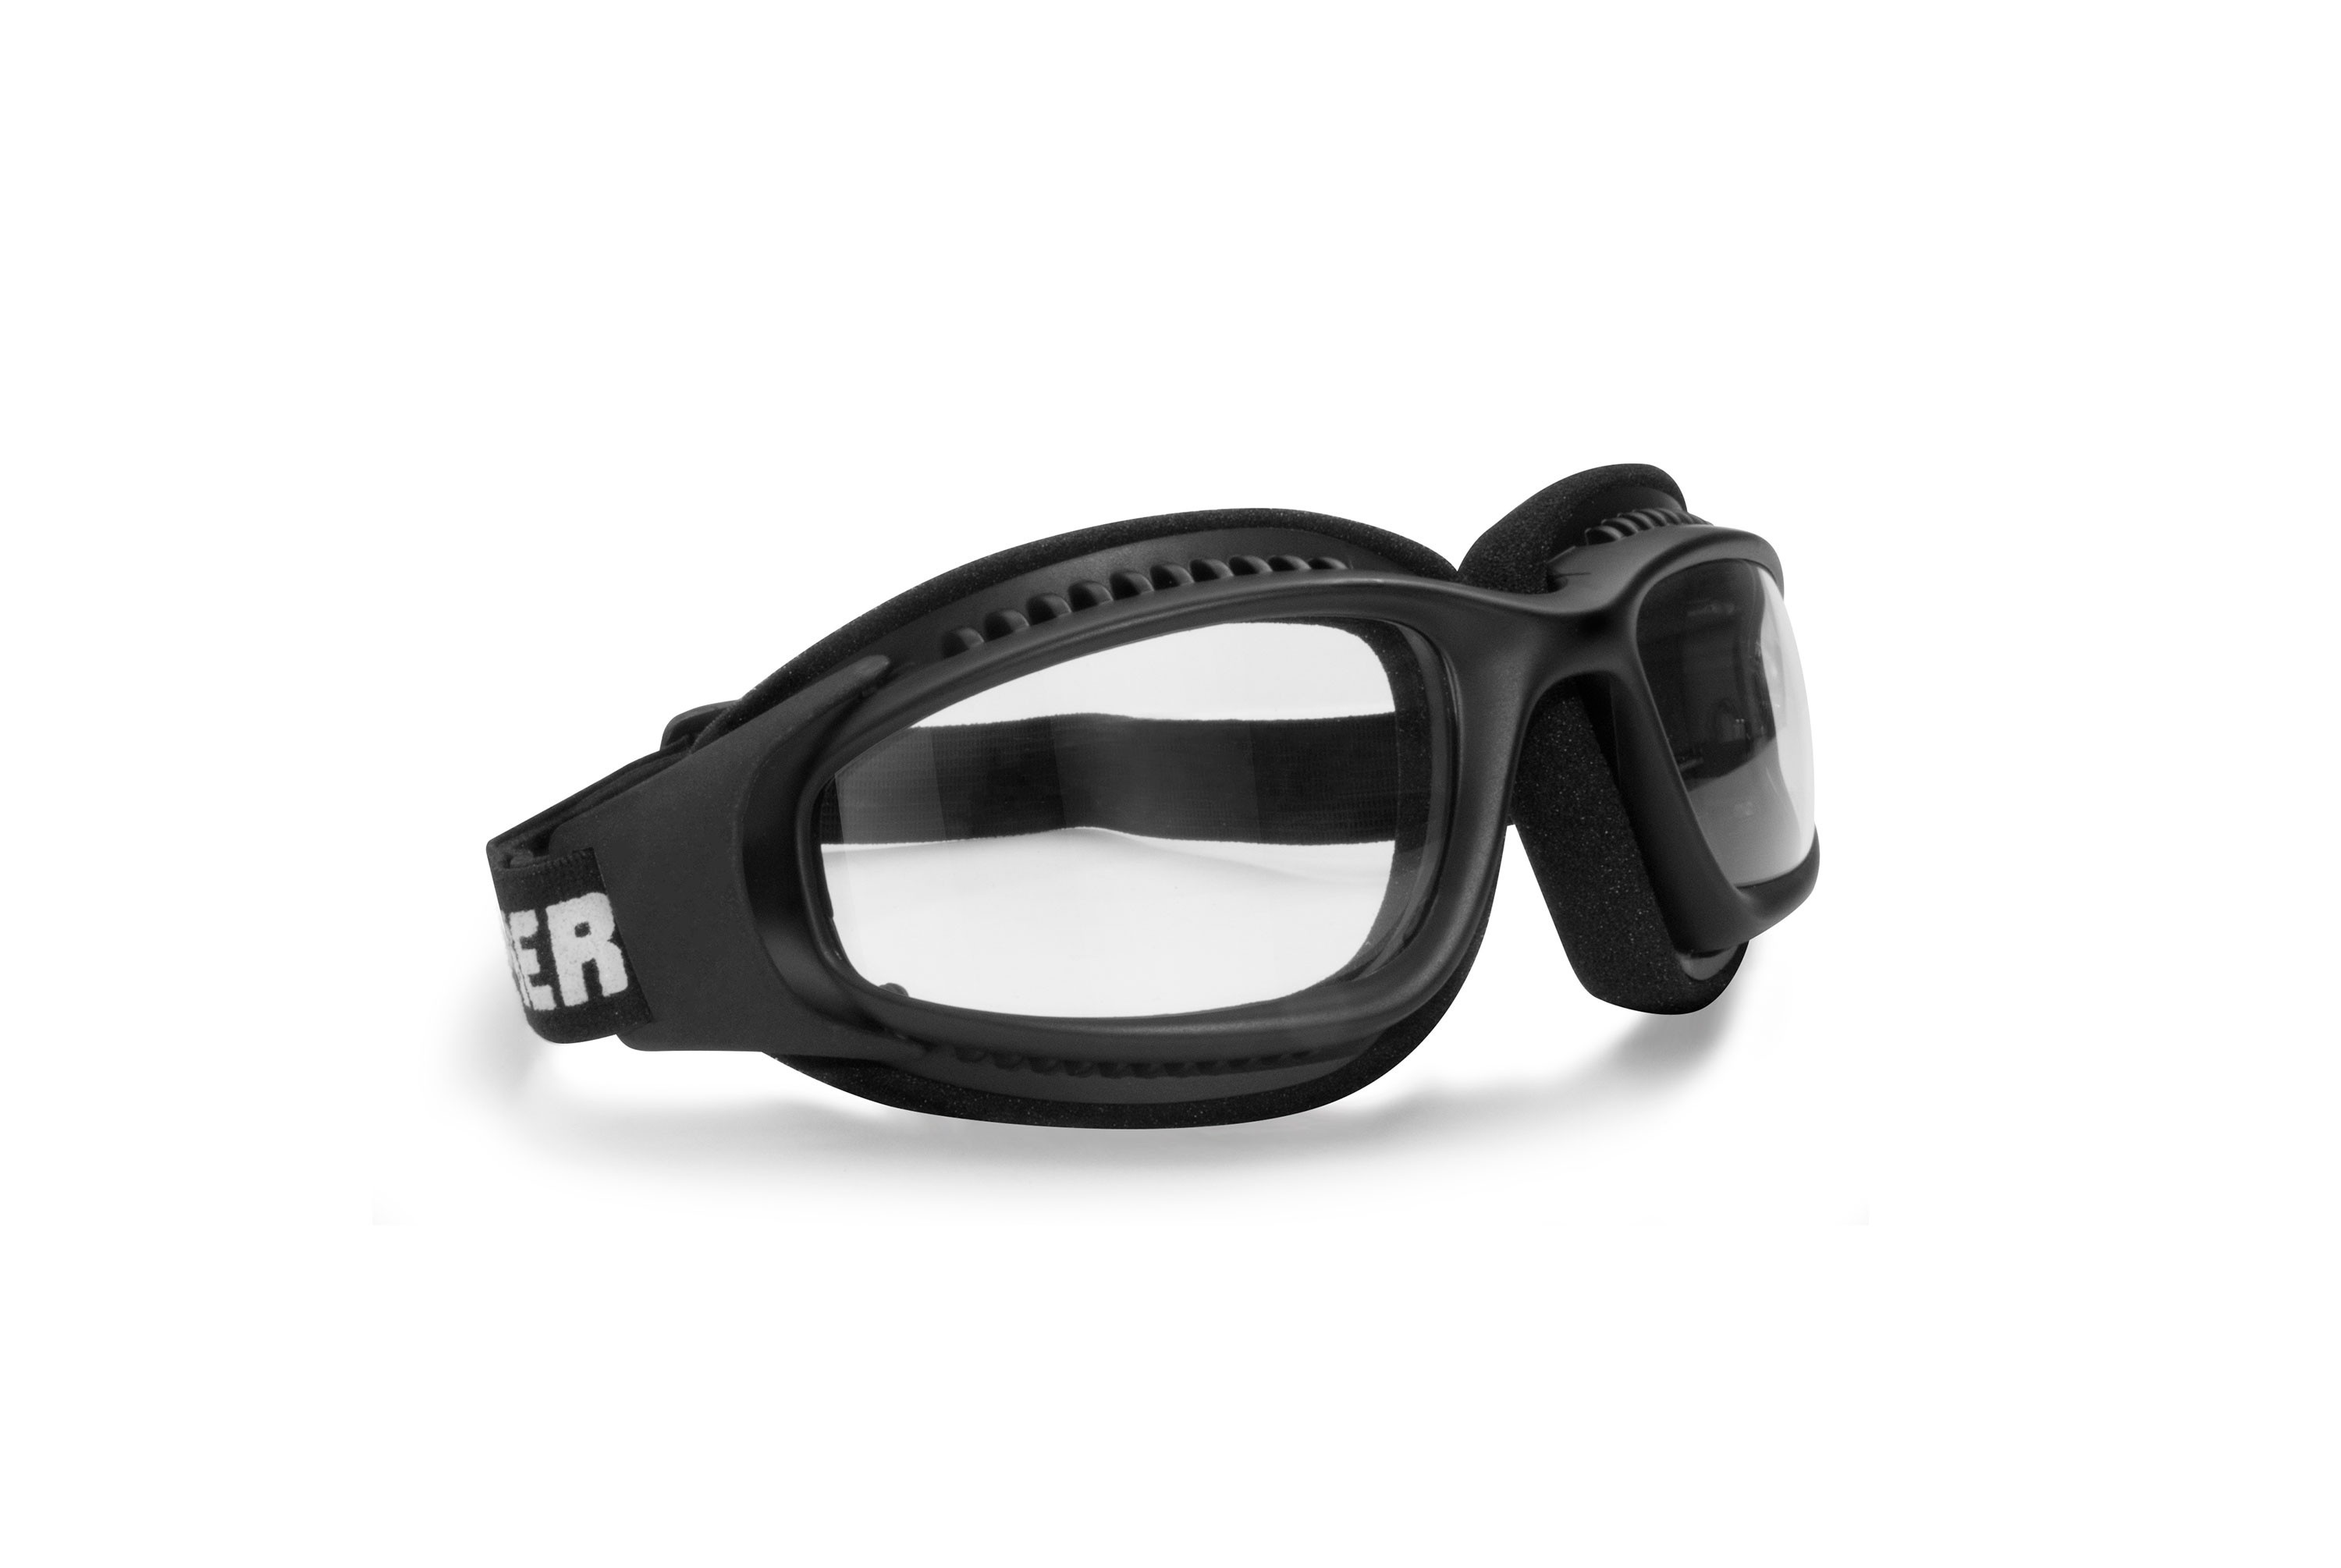 Motorcycle Goggles for Helmets - Photochromic Ventilated Antifog Lens - Adjustable Strap - Mat Black - by Bertoni Italy F113 (Photochromic Lens)